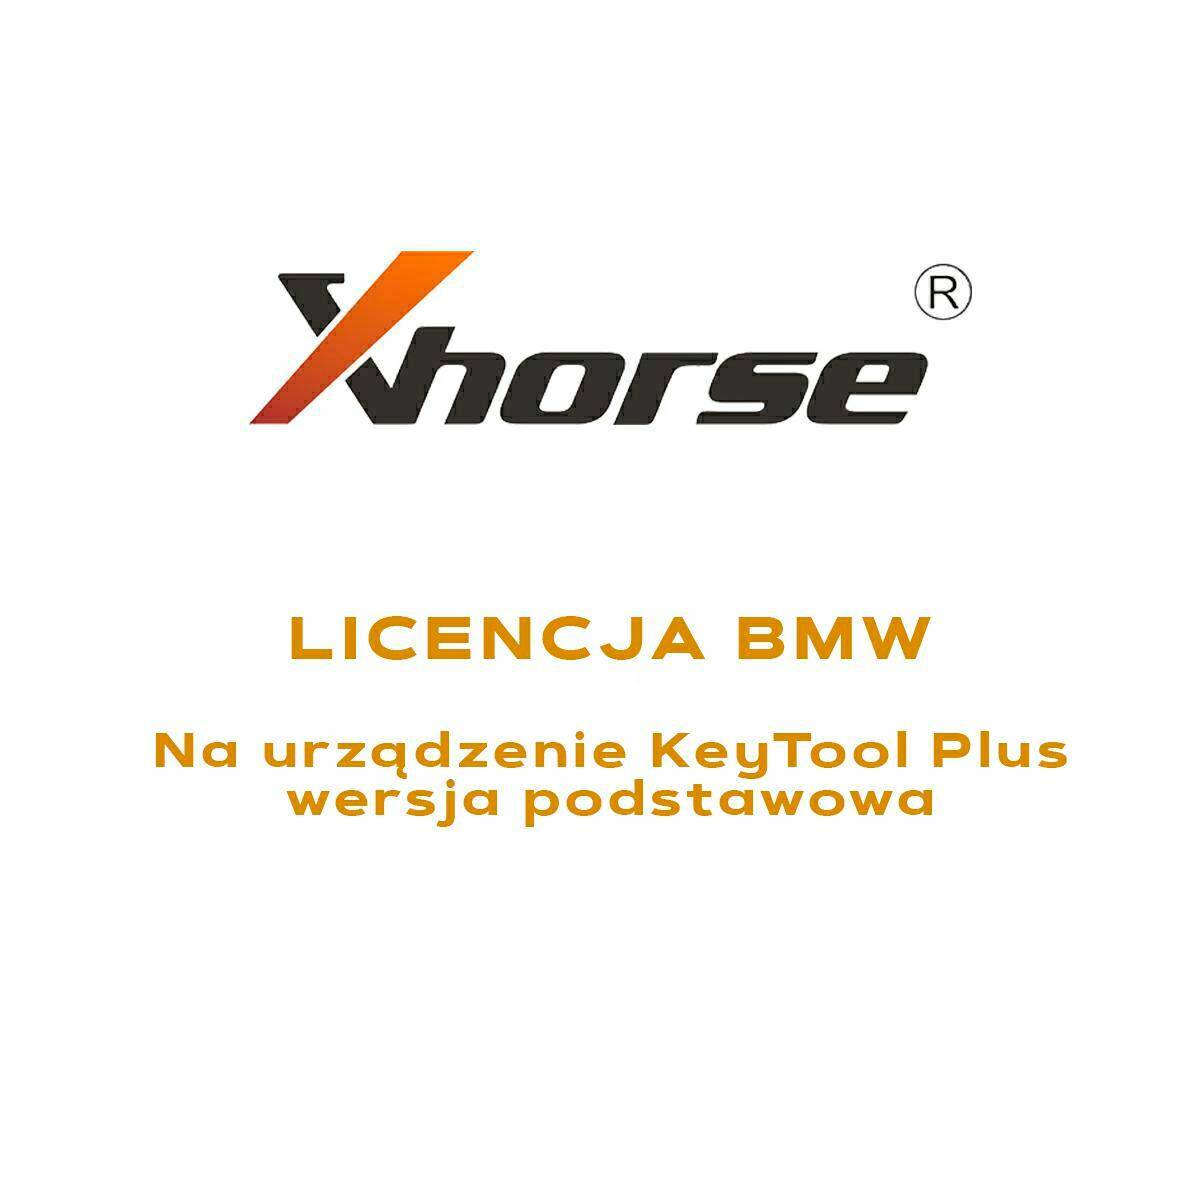 Key Tool Plus BMW xHorse licence